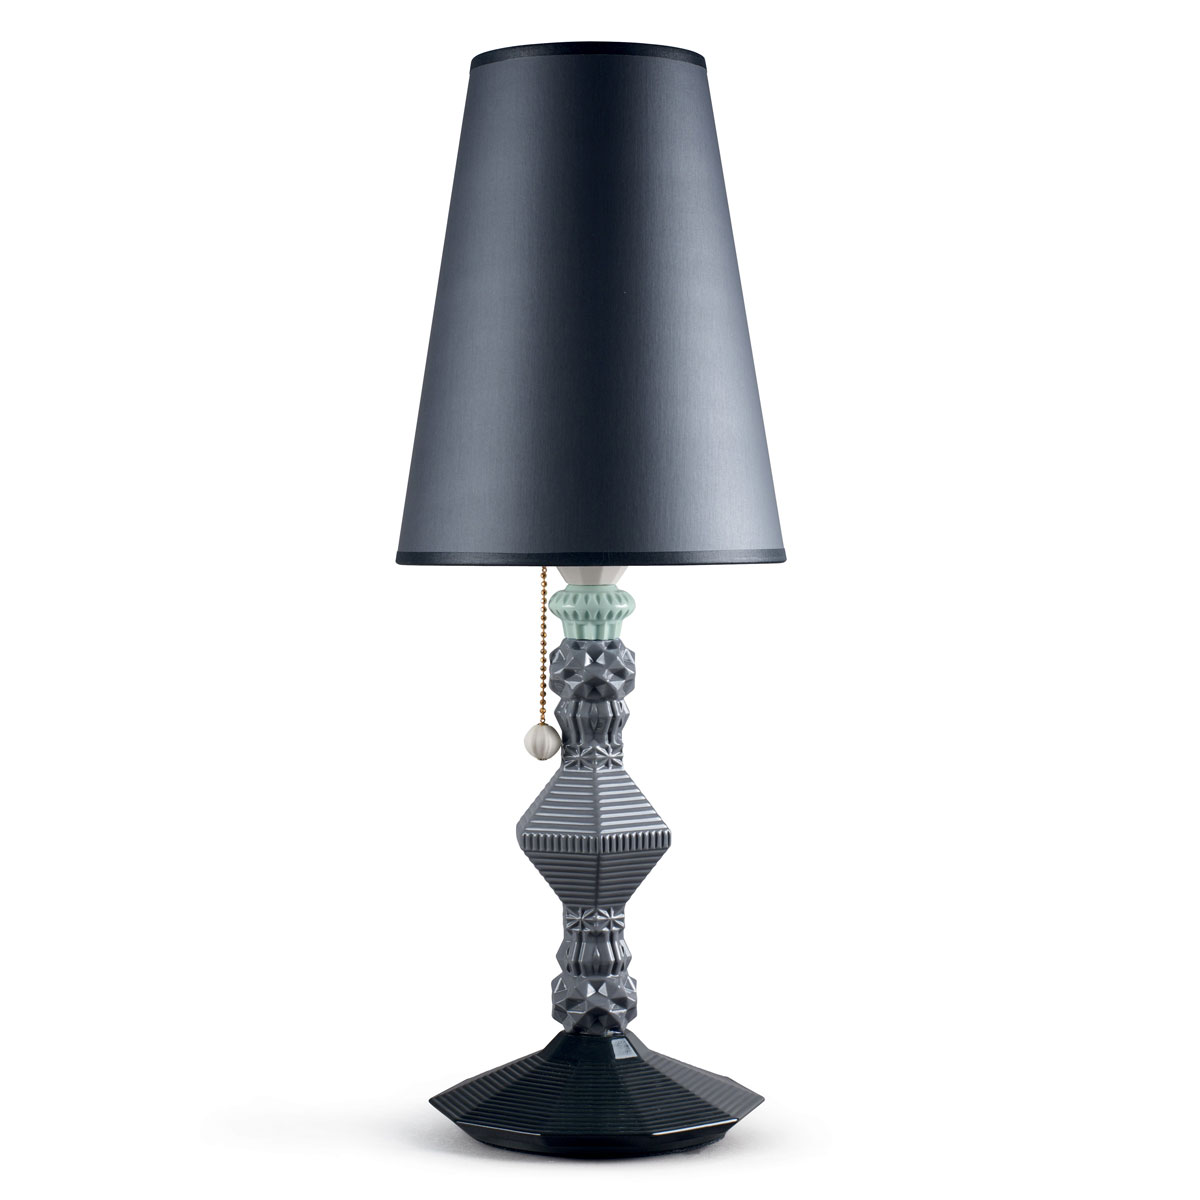 Lladro Classic Lighting, Belle De Nuit Table Lamp. Black